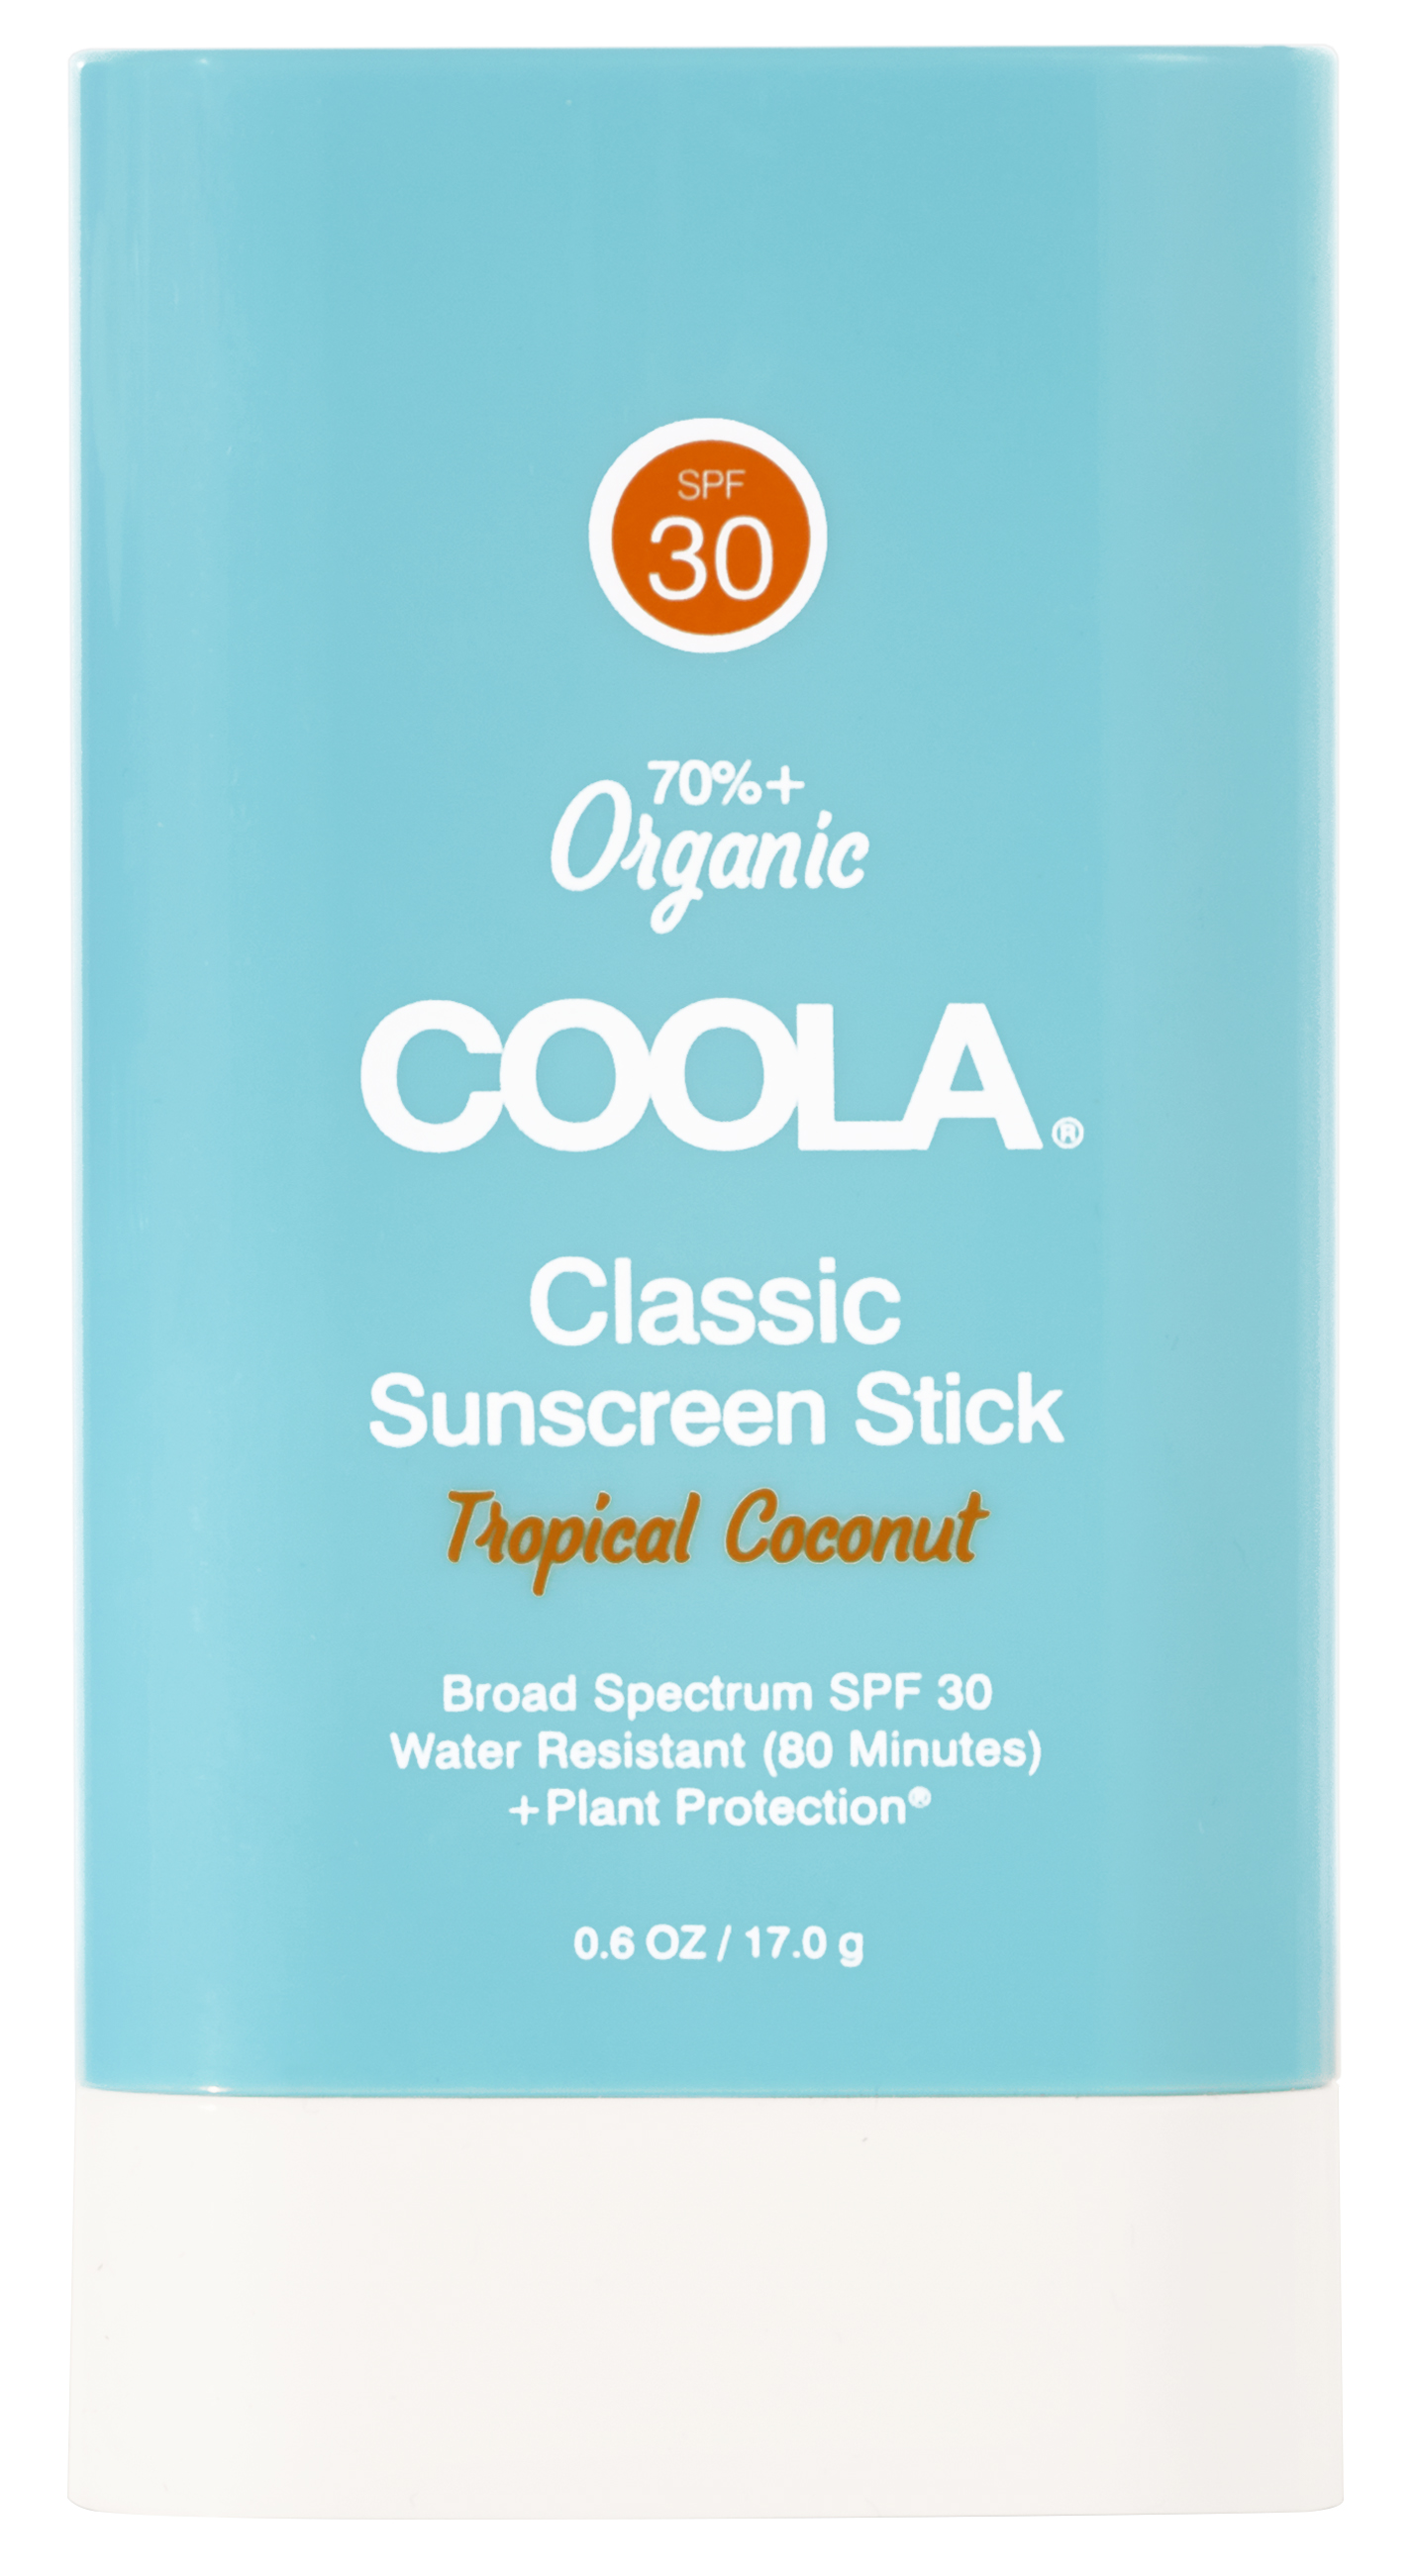 Classic Sunscreen Stick Tropical